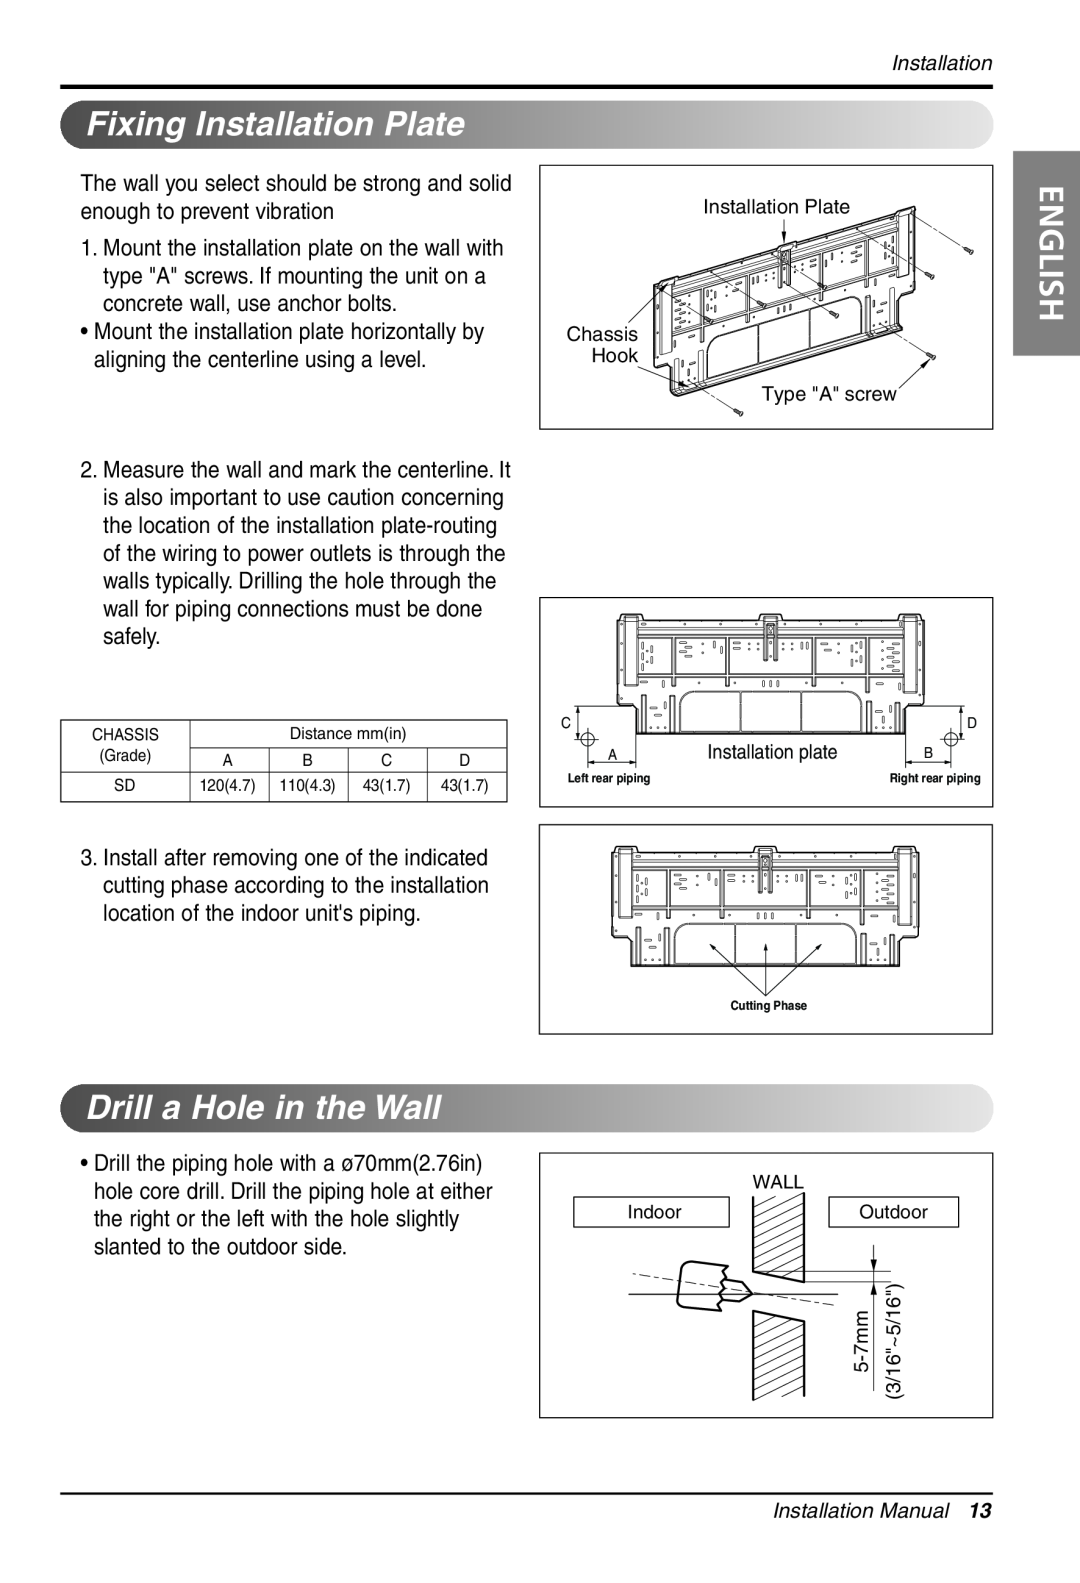 LG Electronics LS305HV installation manual FixingInstallationPlate, DrillaHoleintheWall, English, Installation Manual 